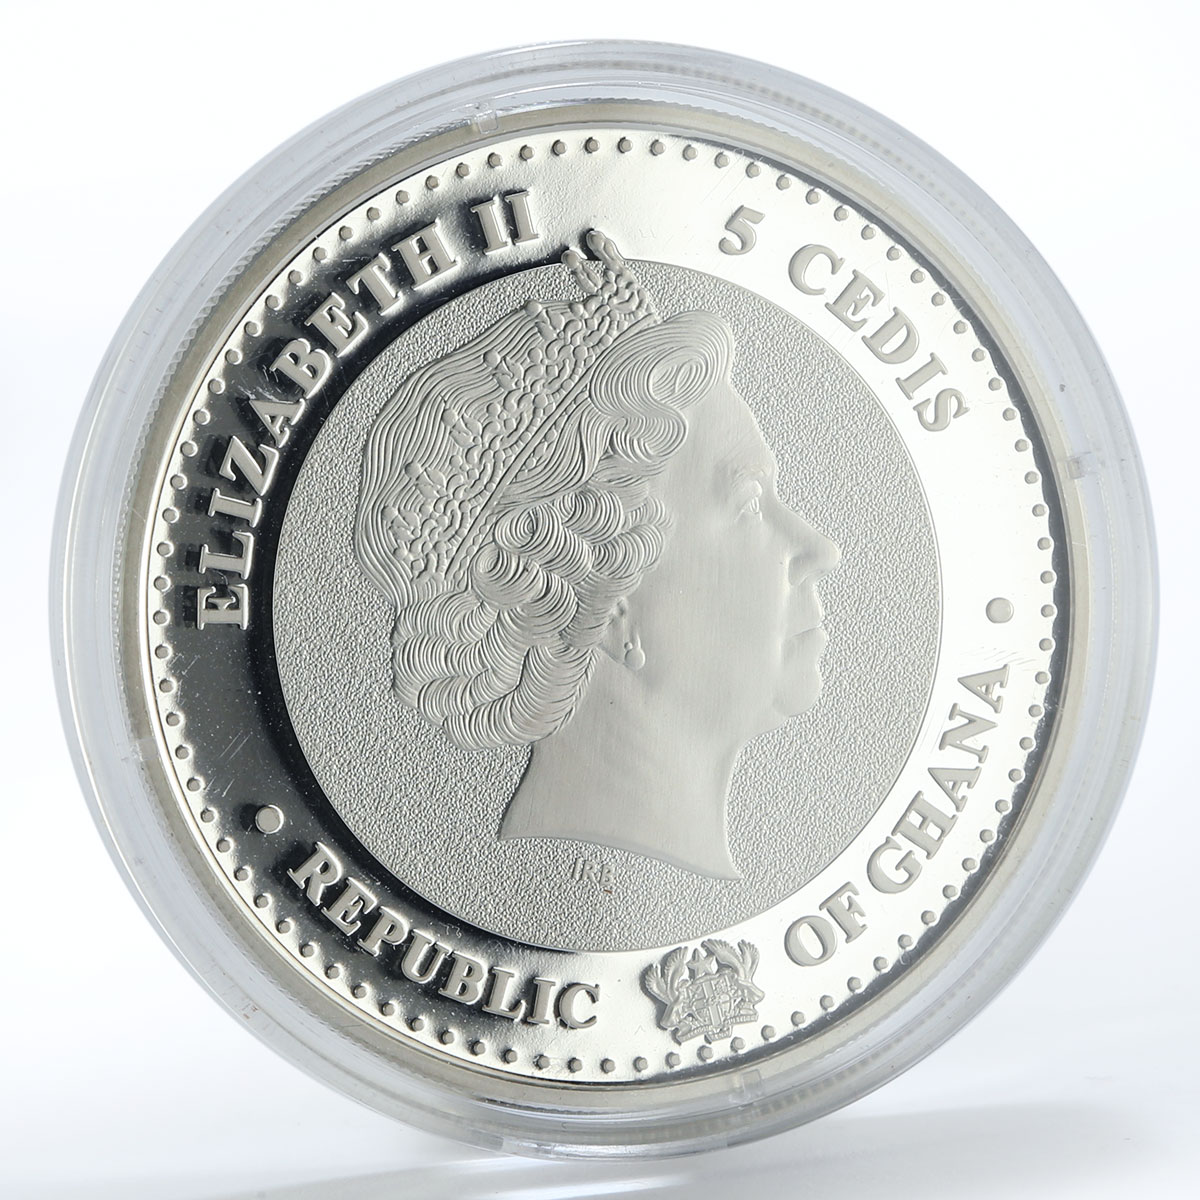 Ghana 5 cedis German Inventions Vacuum proof silver coin 2014